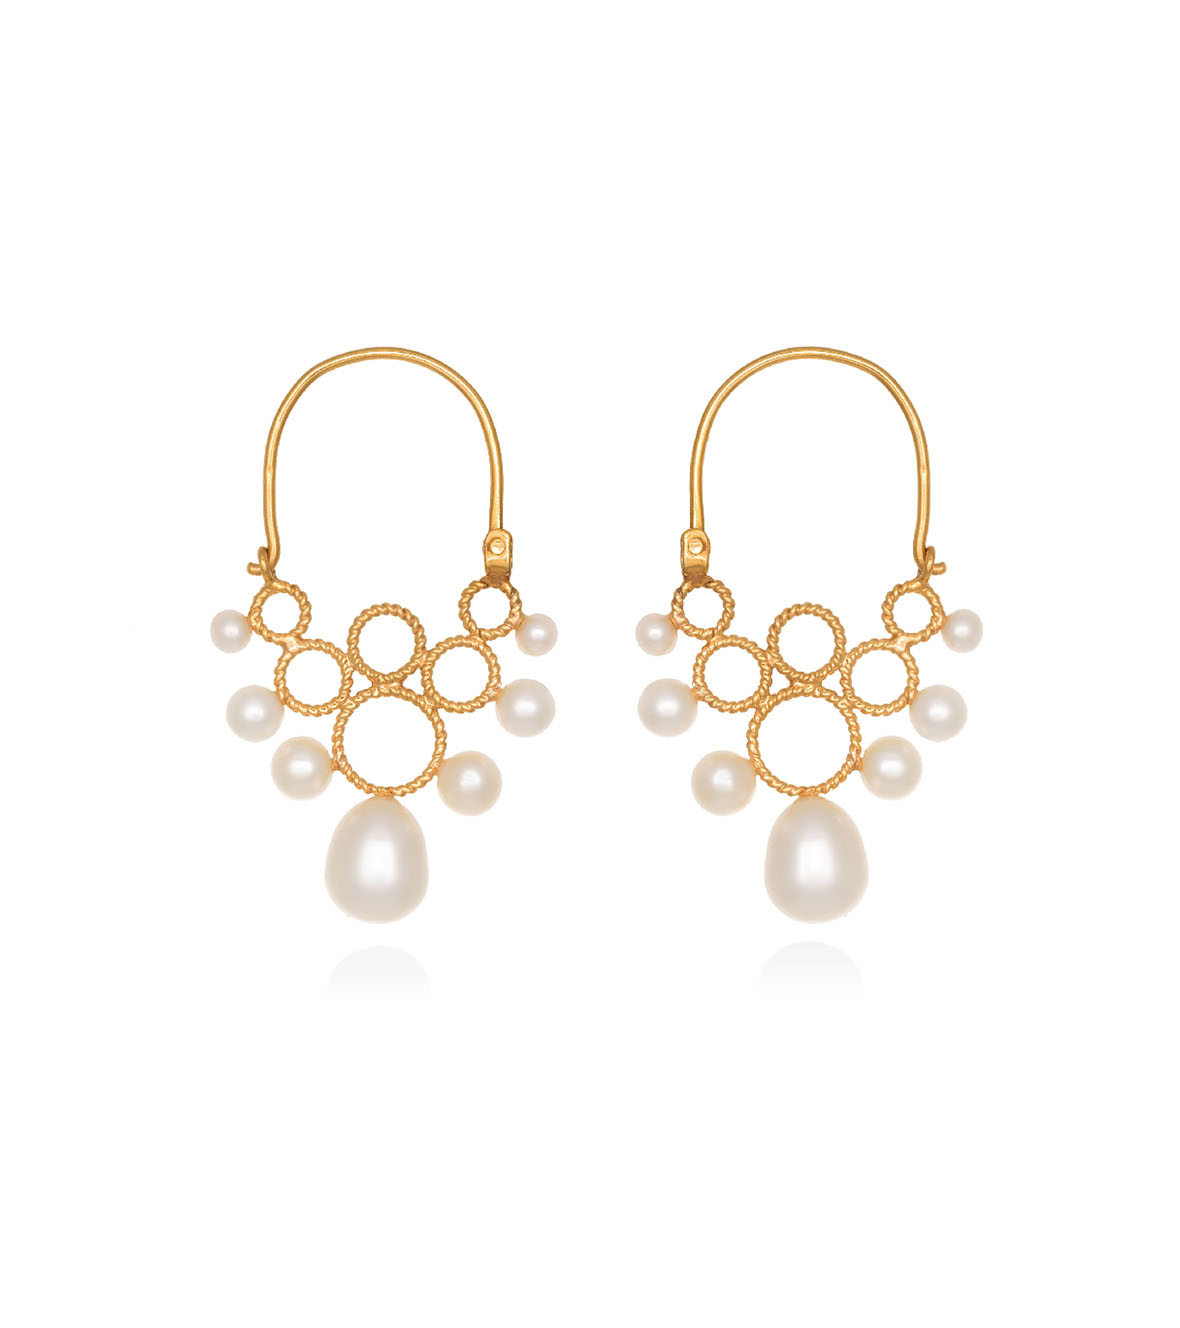 Tiny hoop earrings with pearls